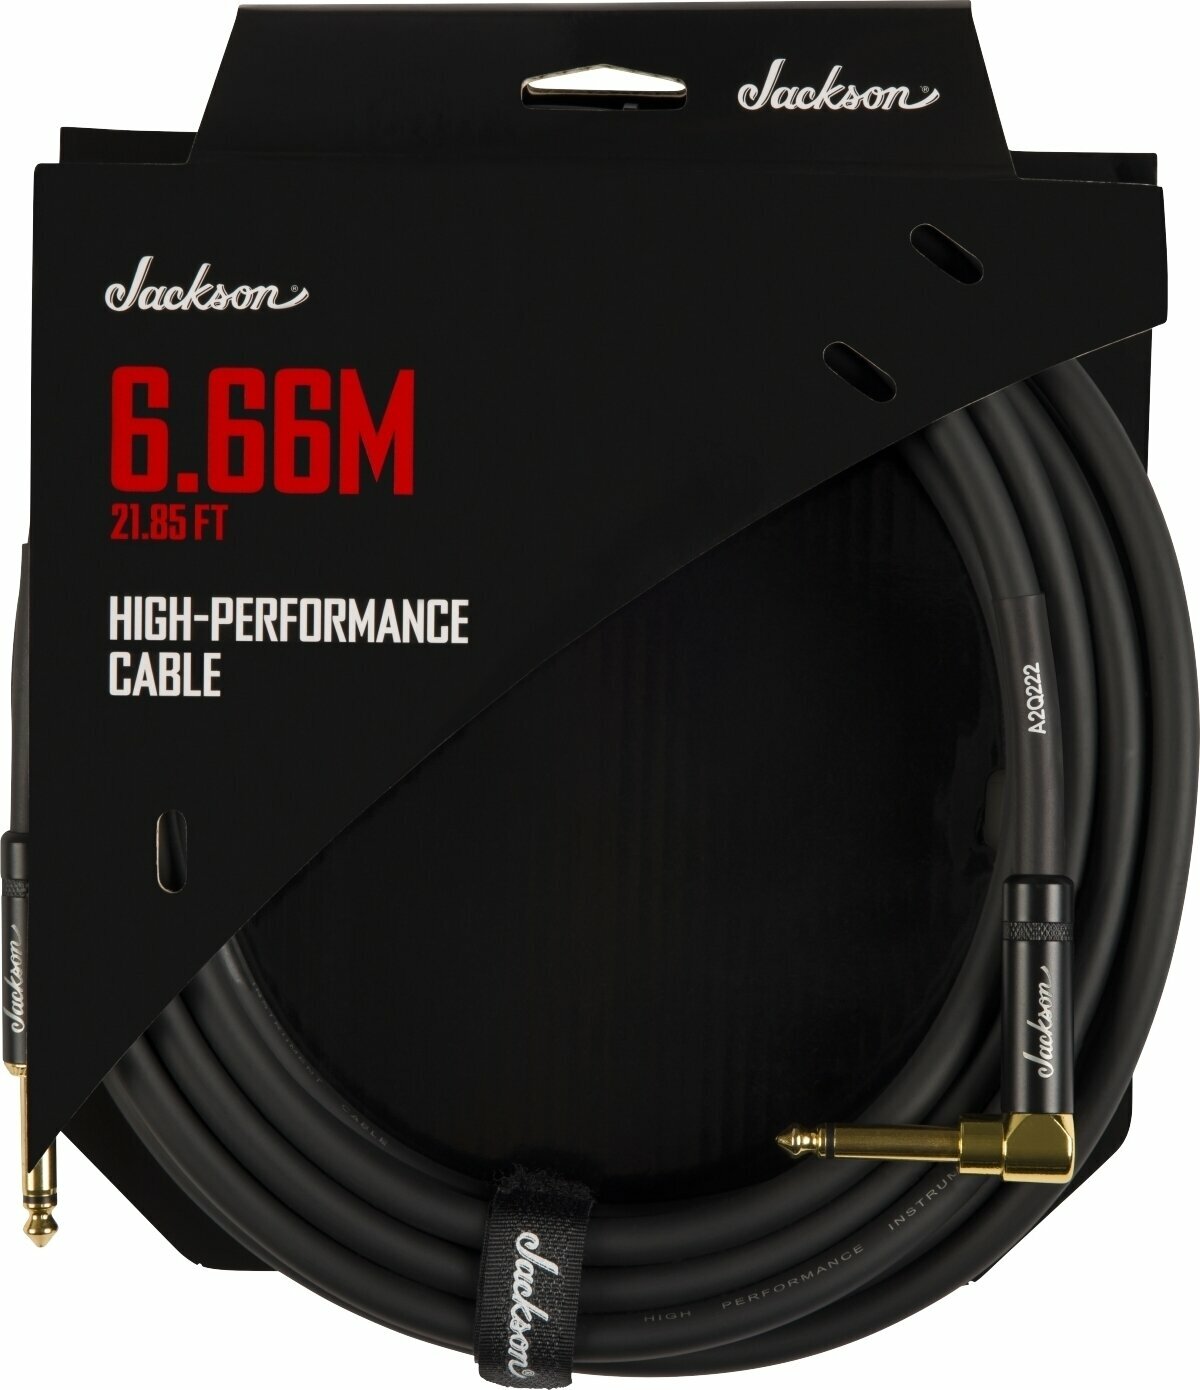 Cablu instrumente Jackson High Performance Cable Negru 6,66 m Drept - Oblic